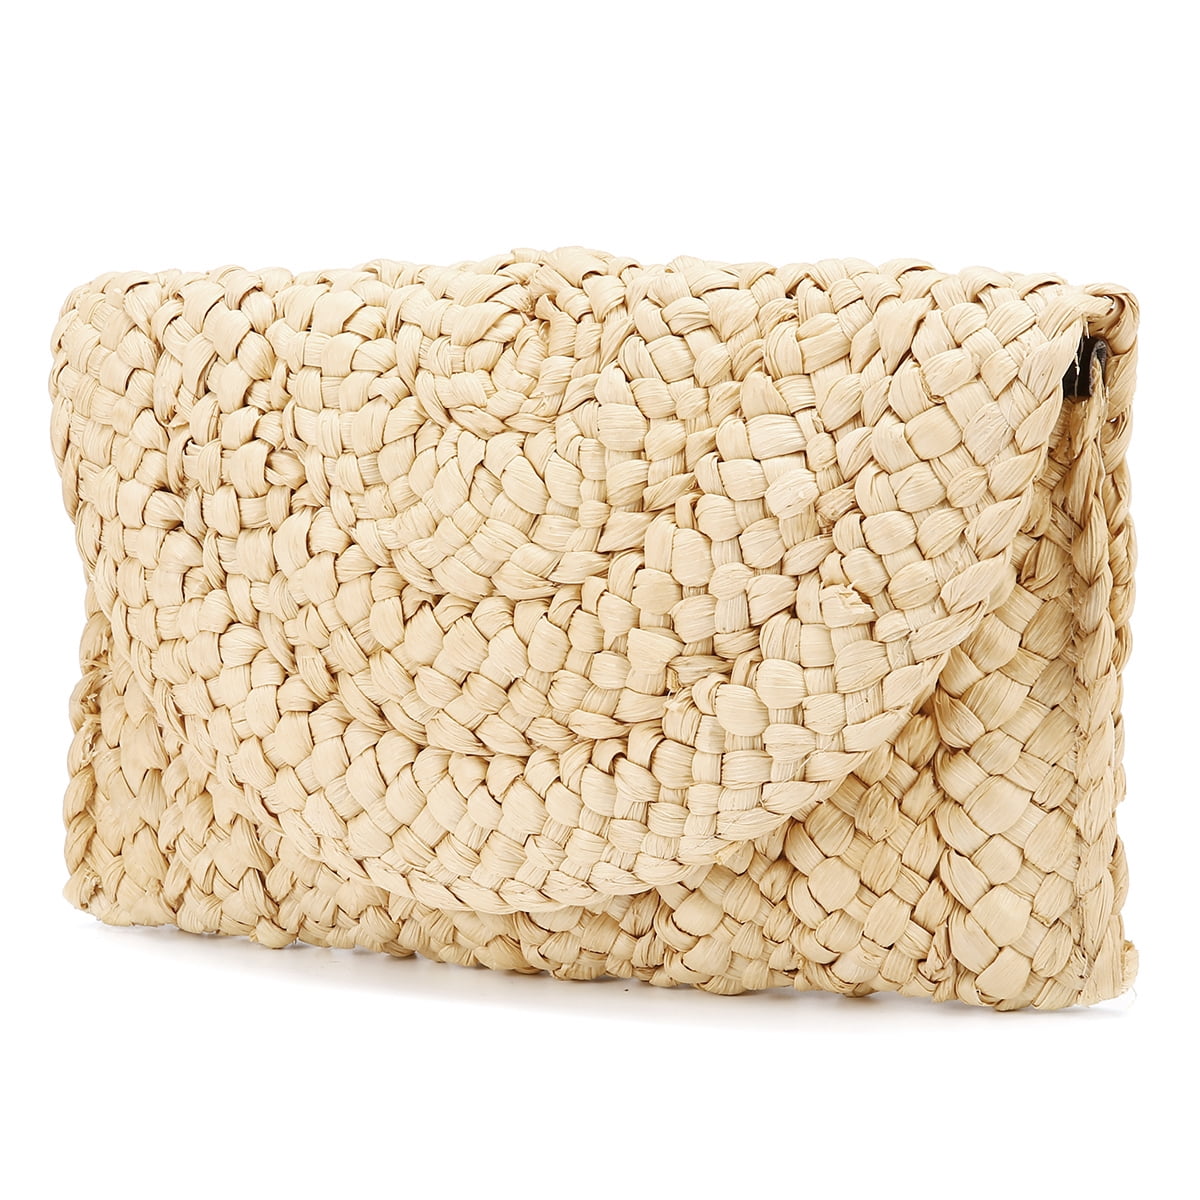 TENDYCOCO Straw Clutch with Tassel Woven Handbag Summer Beach Purse Handmade for Women